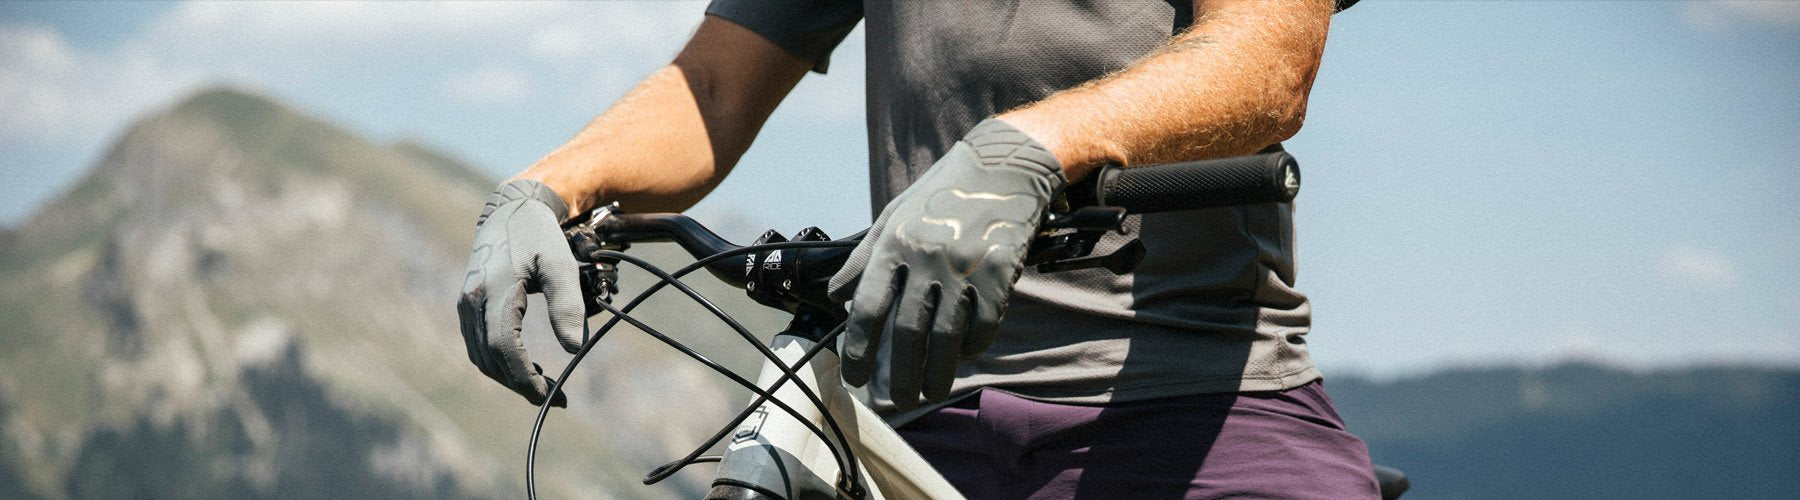 QINGYAN Ridding Gloves 1 Pair Bike Bicycle Gloves Breathable Summer Mittens Full Finger Touchscreen Men Women MTB Gloves